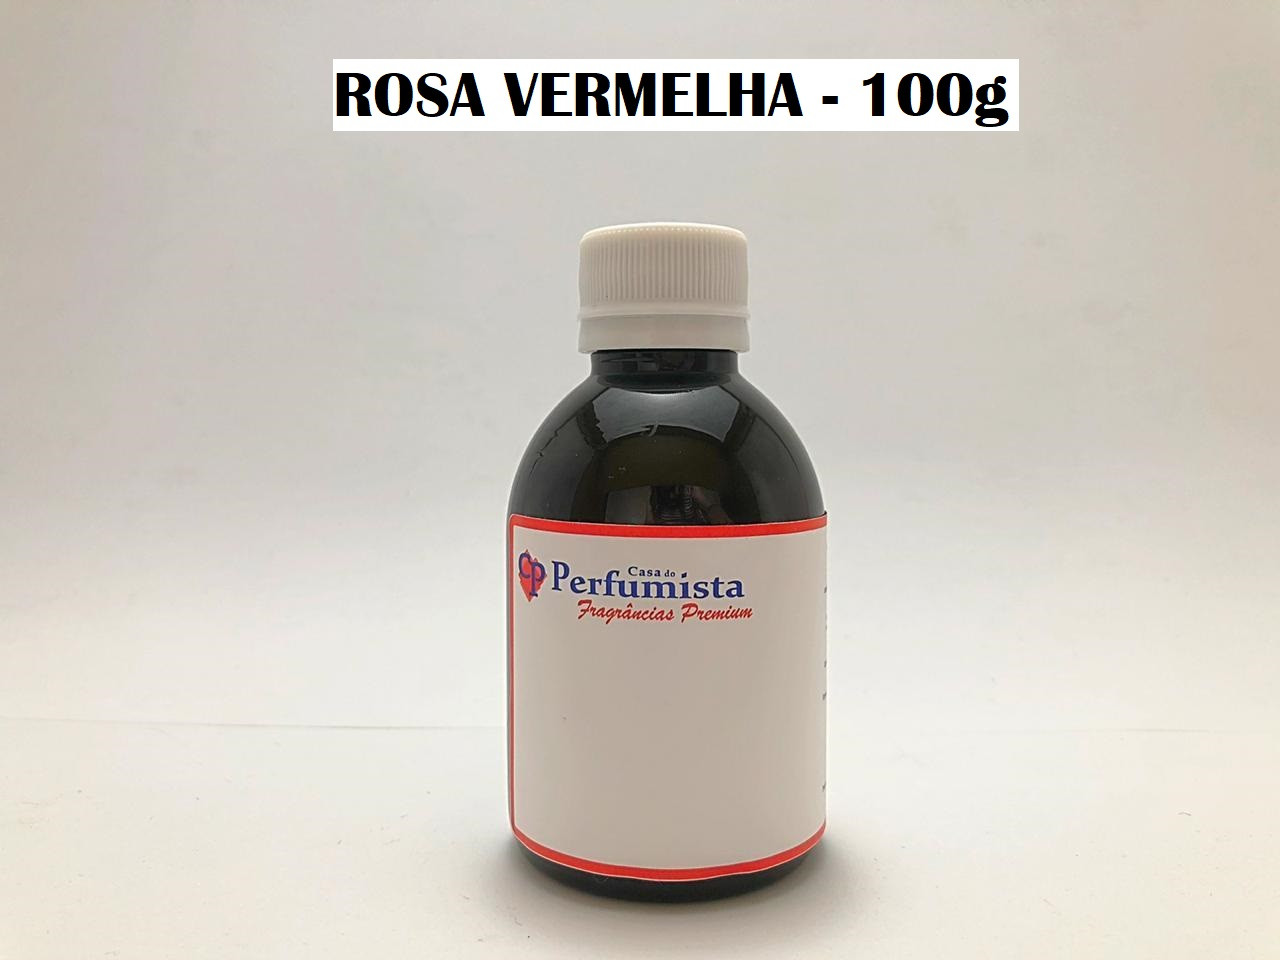 ROSA VERMELHA - 100g